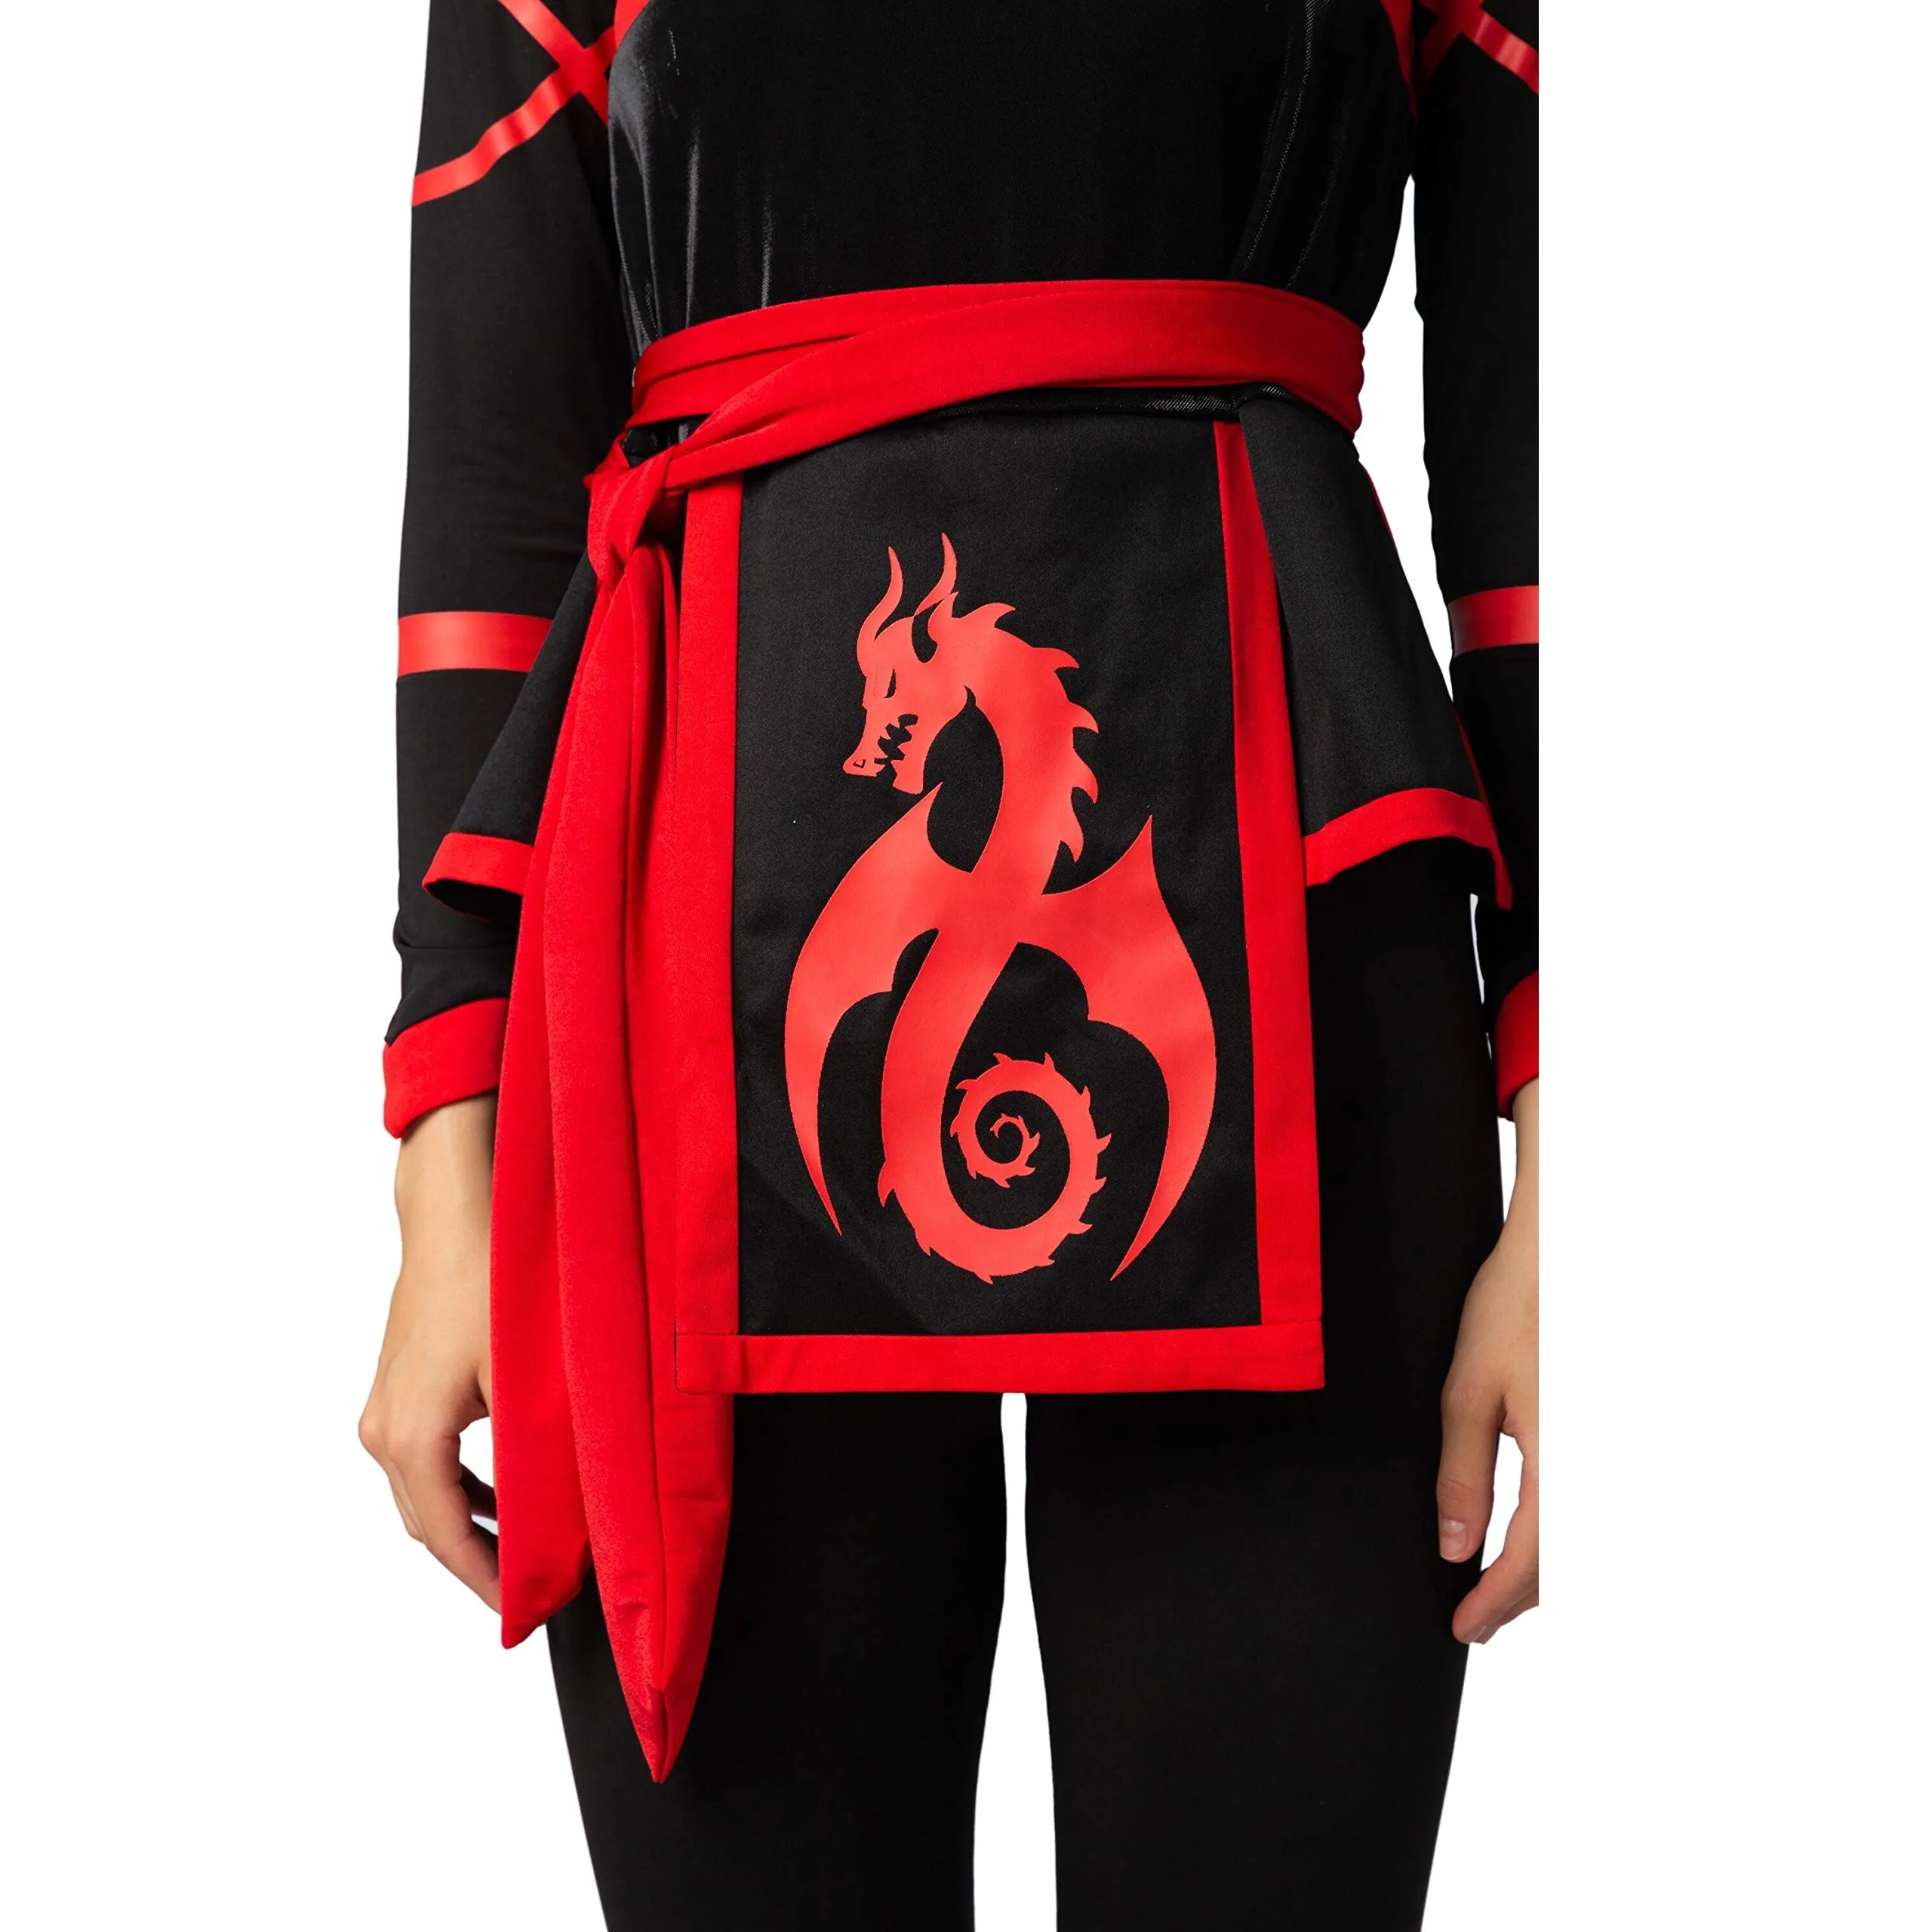 Leg Avenue Dragon Ninja Women's Halloween Fancy-Dress Costume for Adult, S  